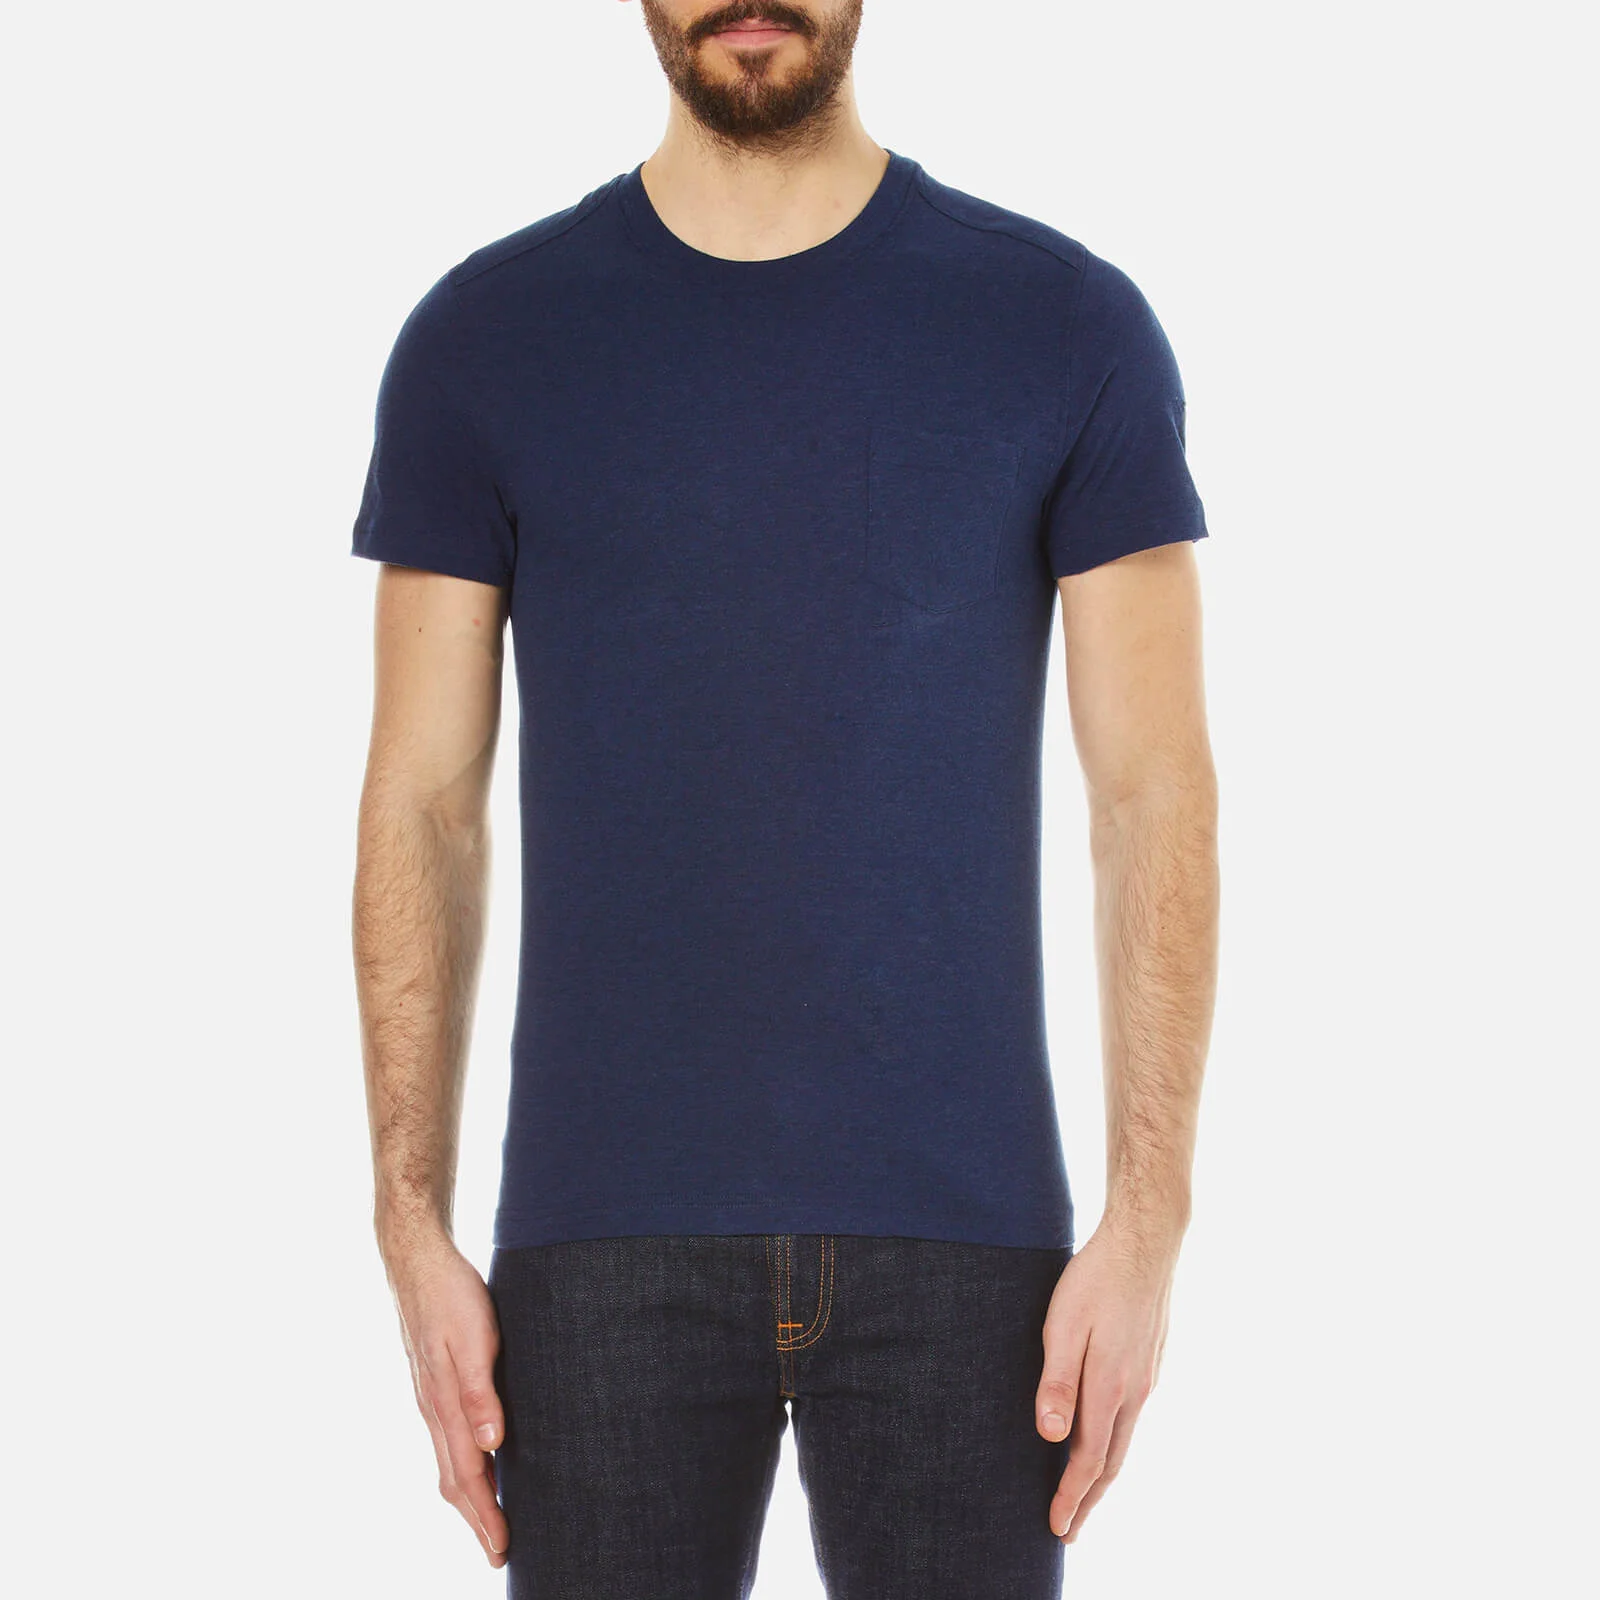 Belstaff Men's New Thom T-Shirt - Bright Indigo Melange Image 1